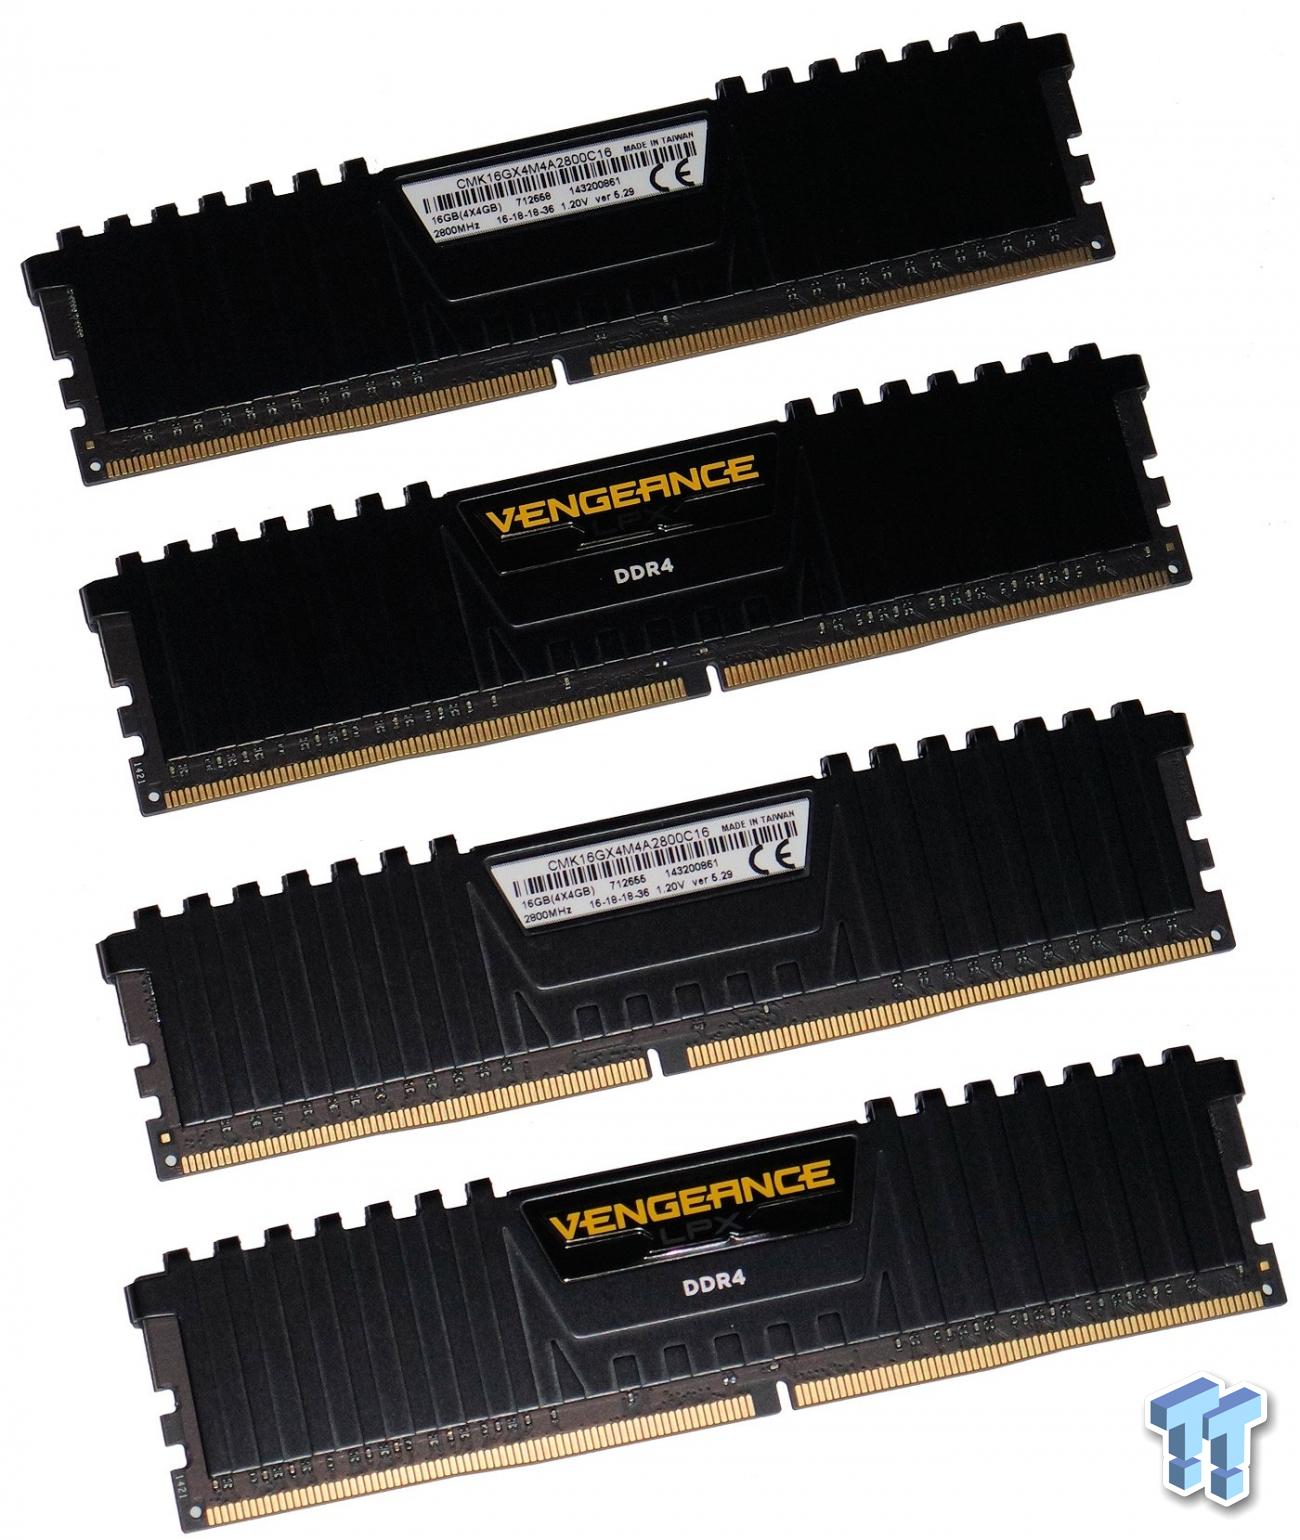 Corsair Vengeance LPX DDR4-2800 Memory Kit Review